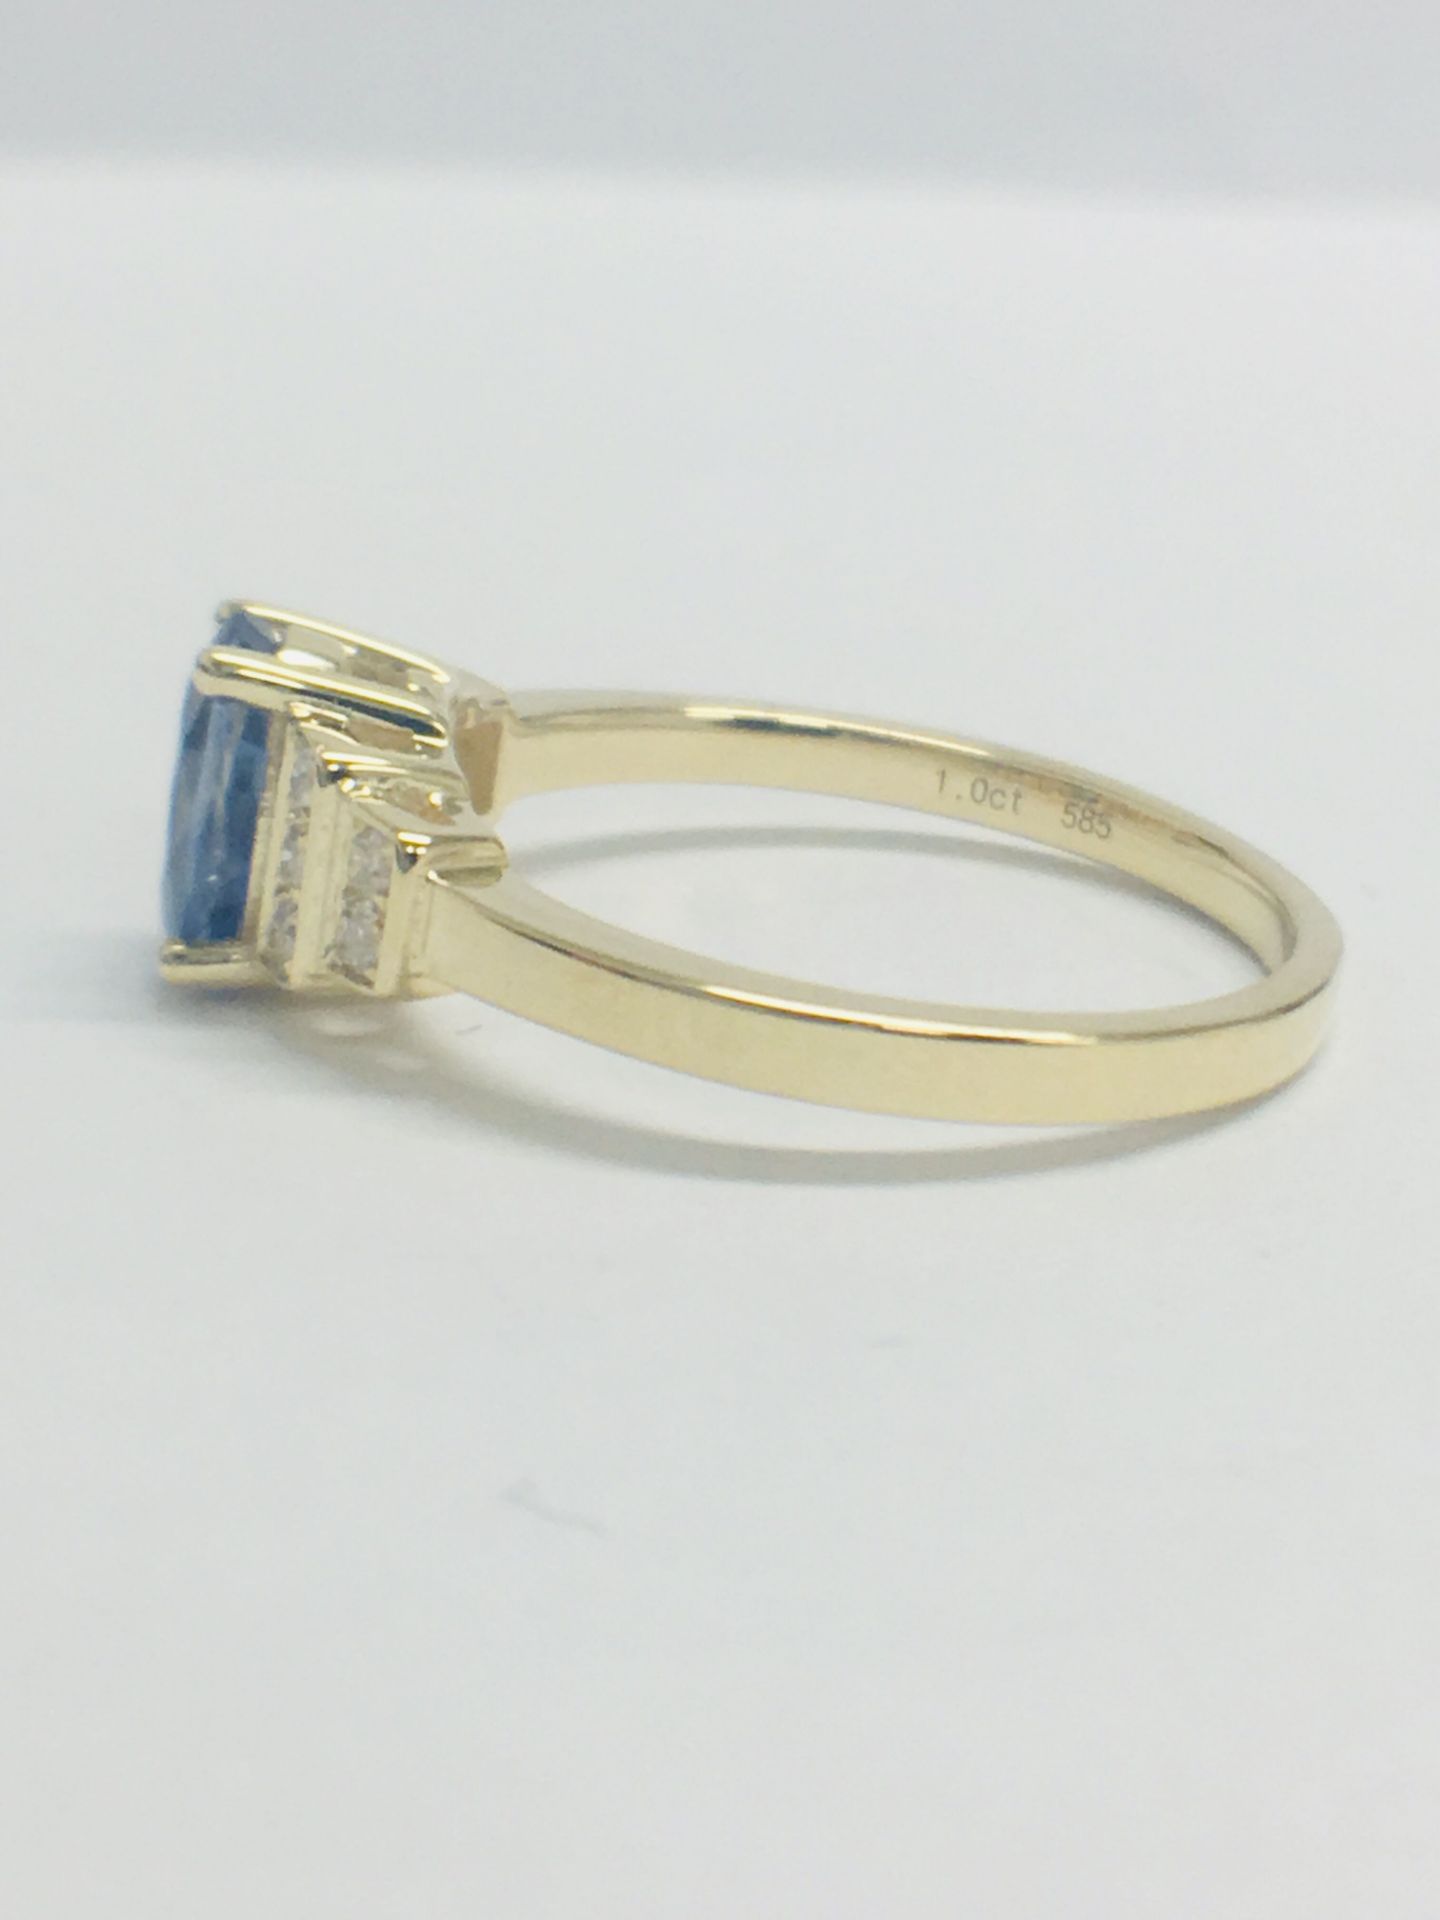 14ct Yellow Gold Sapphire & Diamond Ring - Image 4 of 8